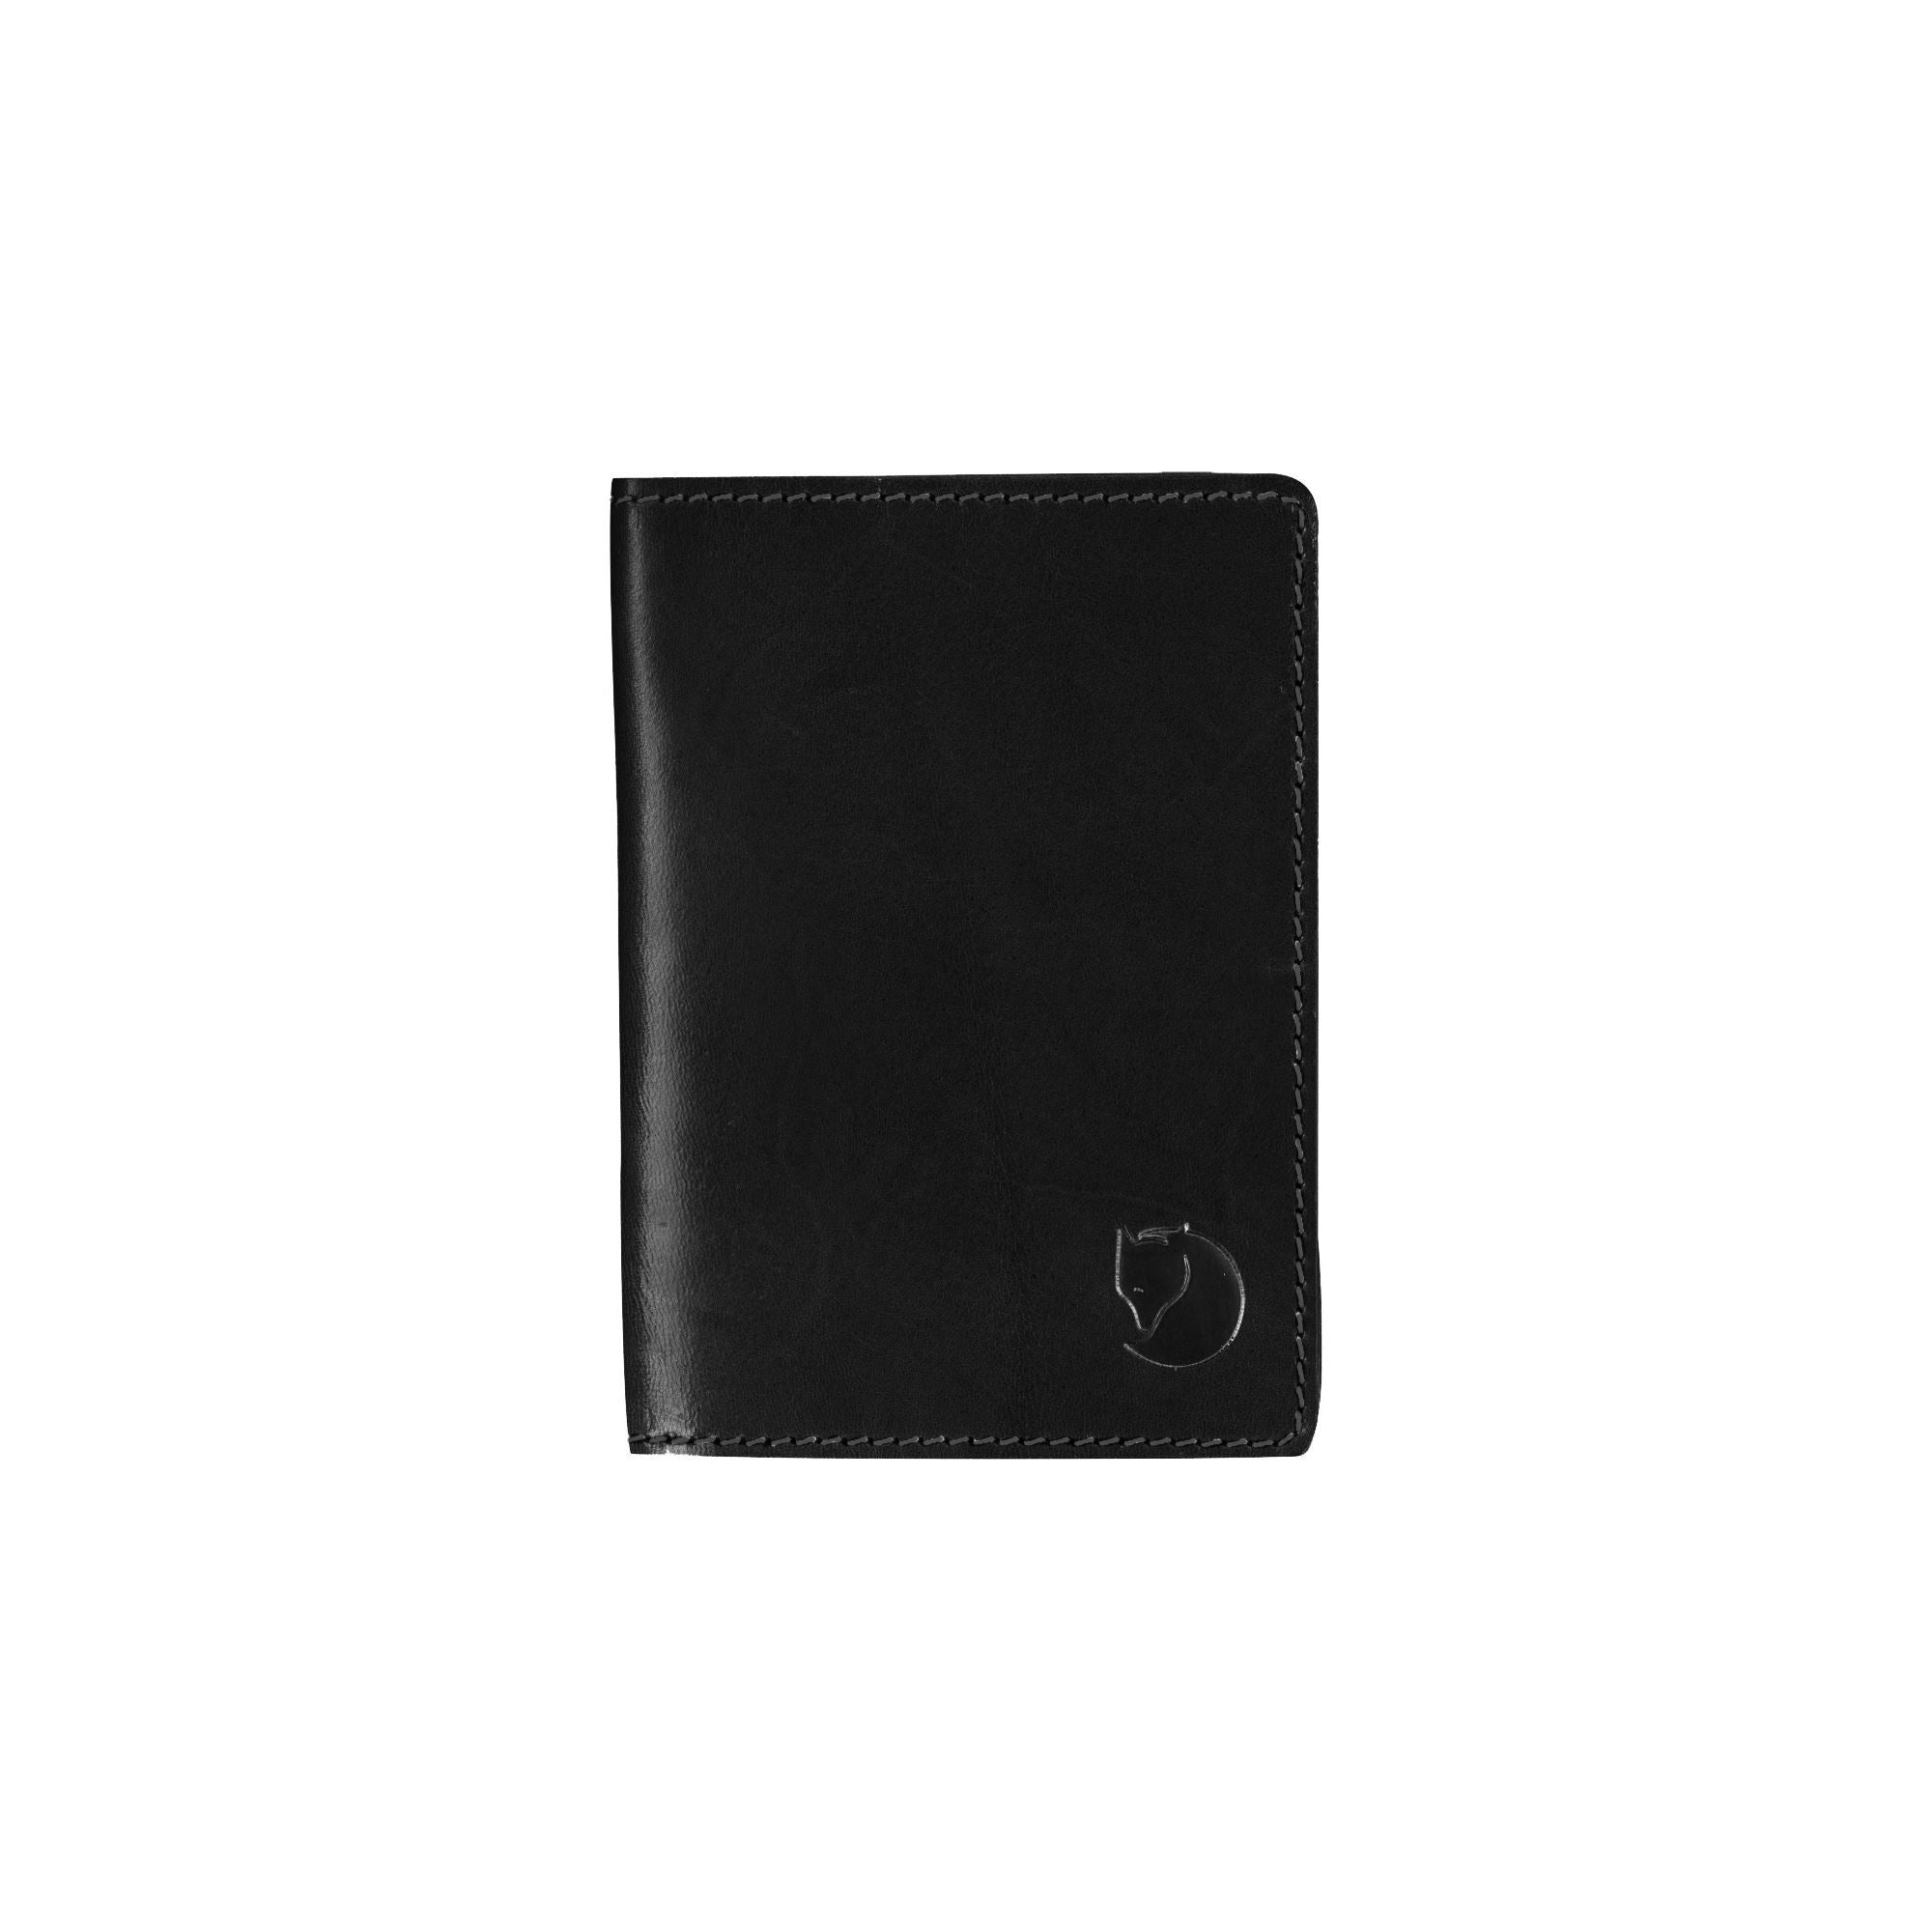 Fjallraven - Leather Passport Cover, Black